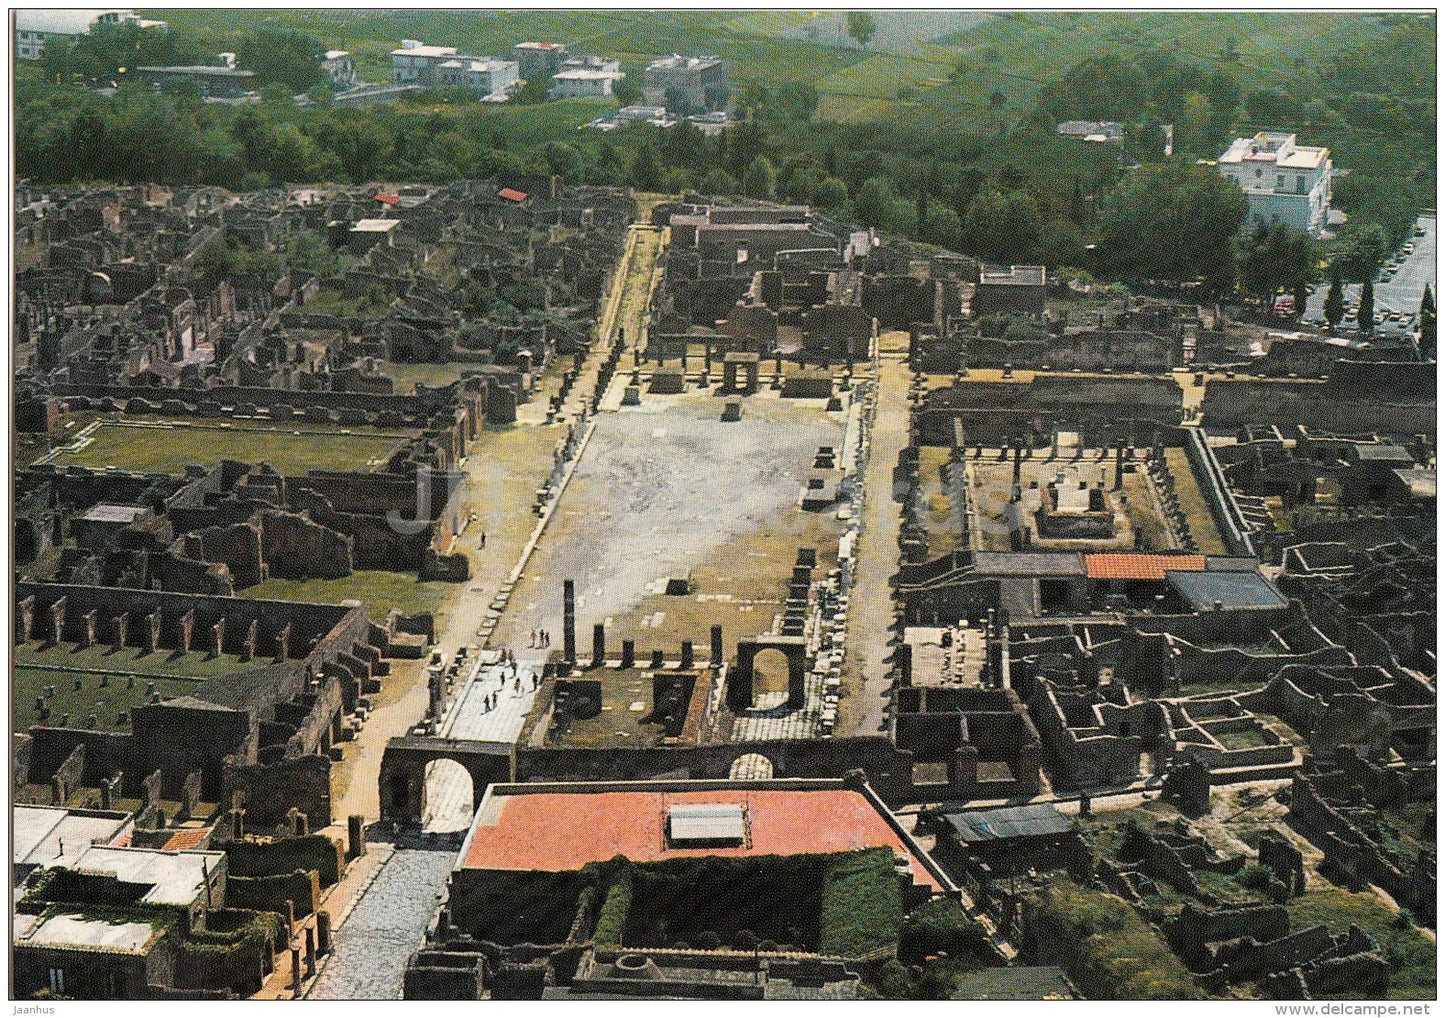 Pompei Scavi & Il Foro - Pompei Excavations , The Forum - 880 - Italy - Italia - unused - JH Postcards